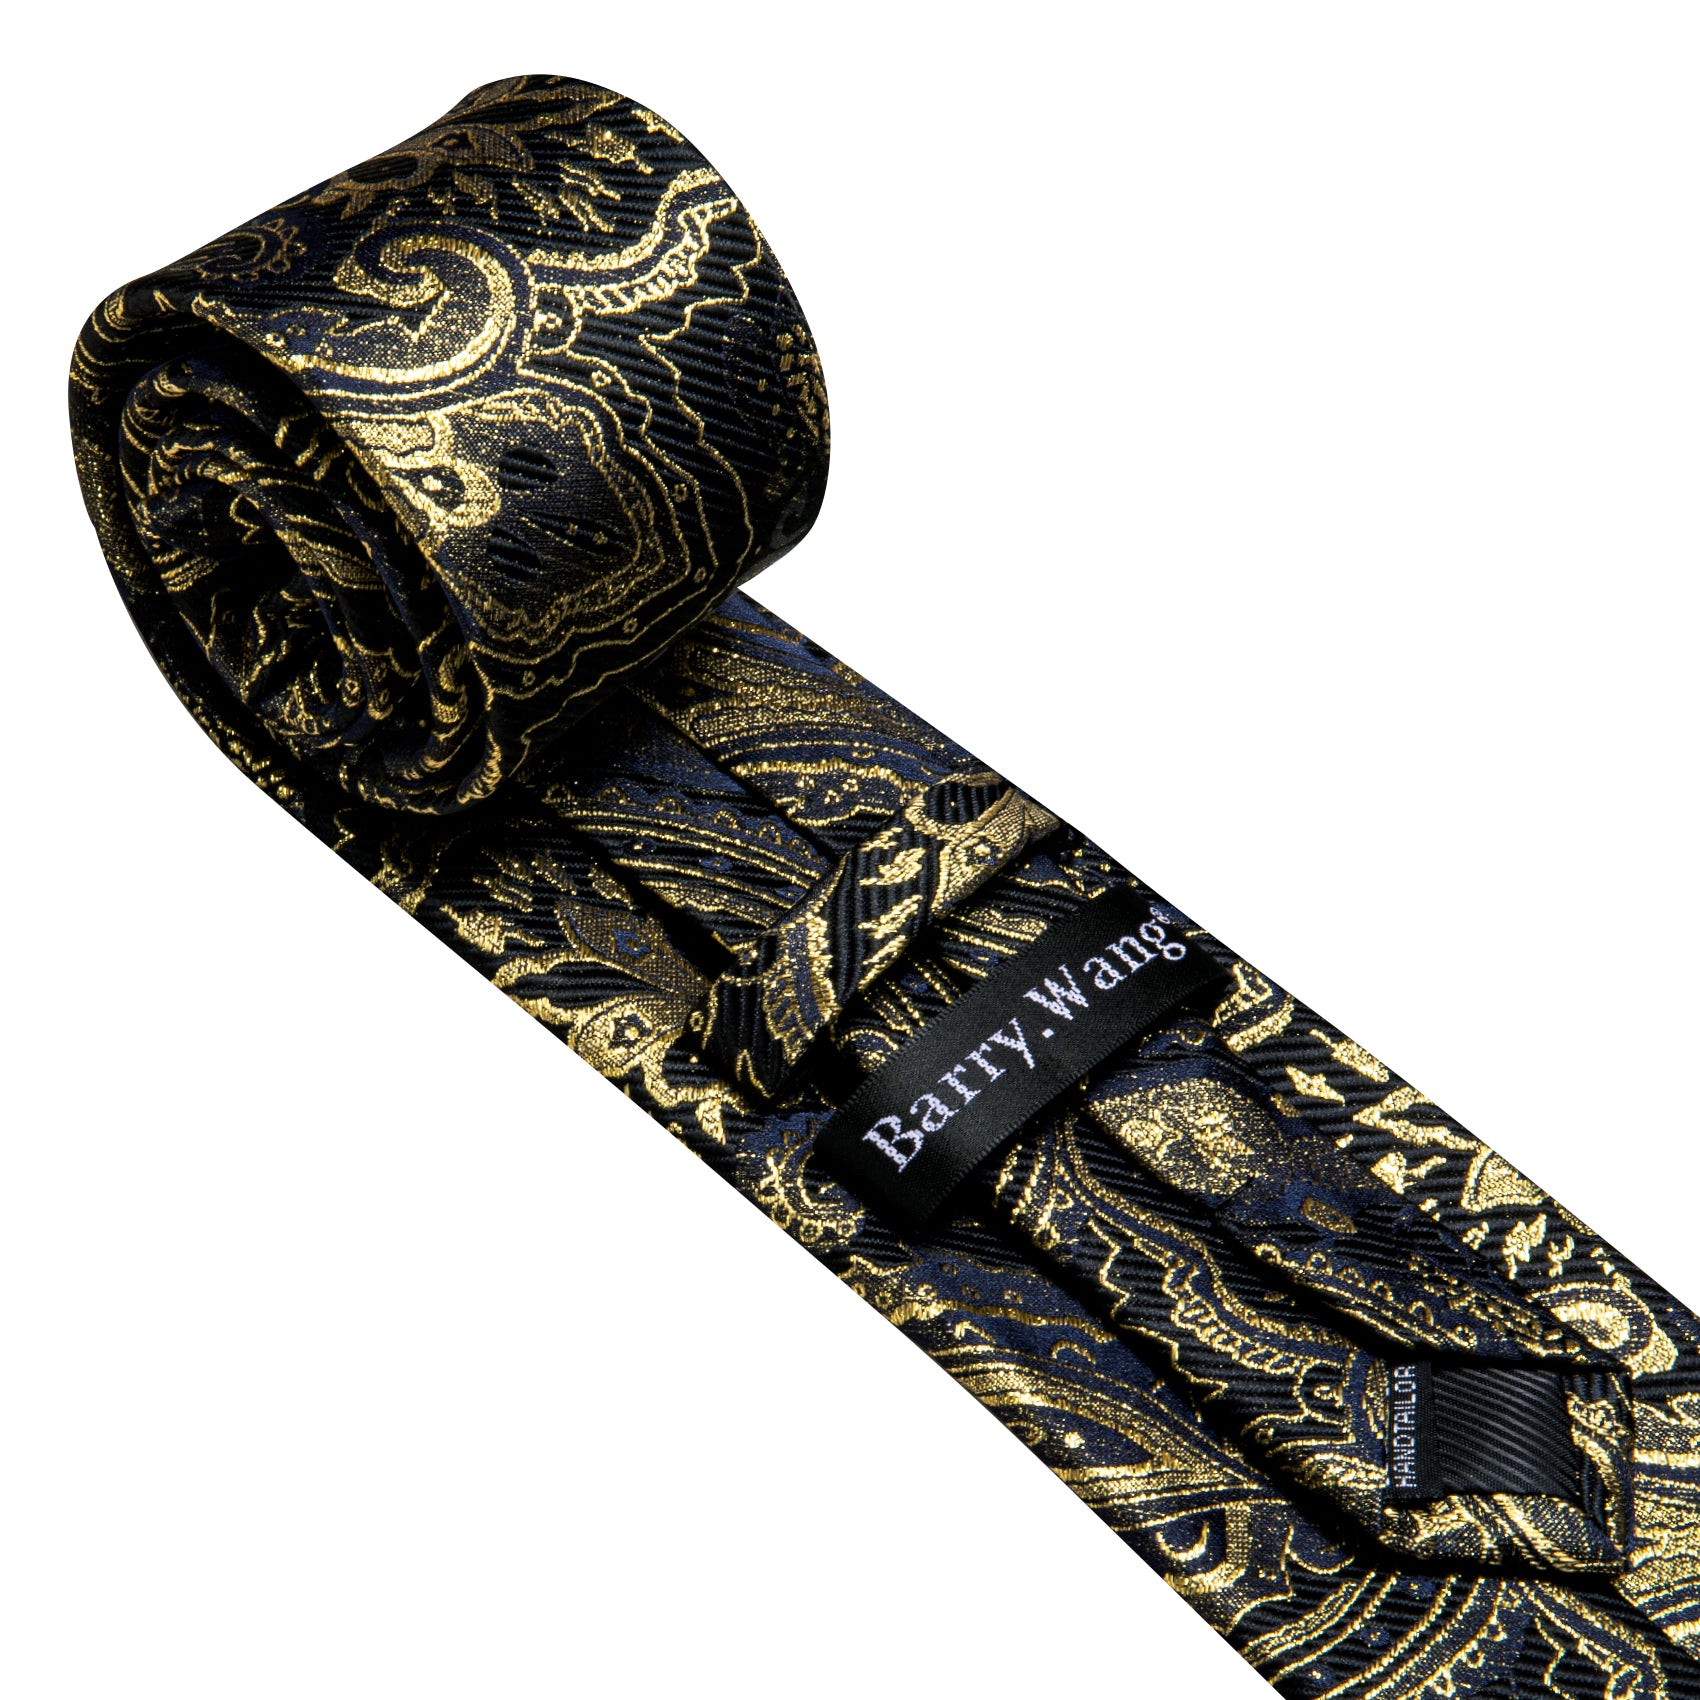 Black Gold Paisley Silk Tie Pocket Square Cufflinks Set